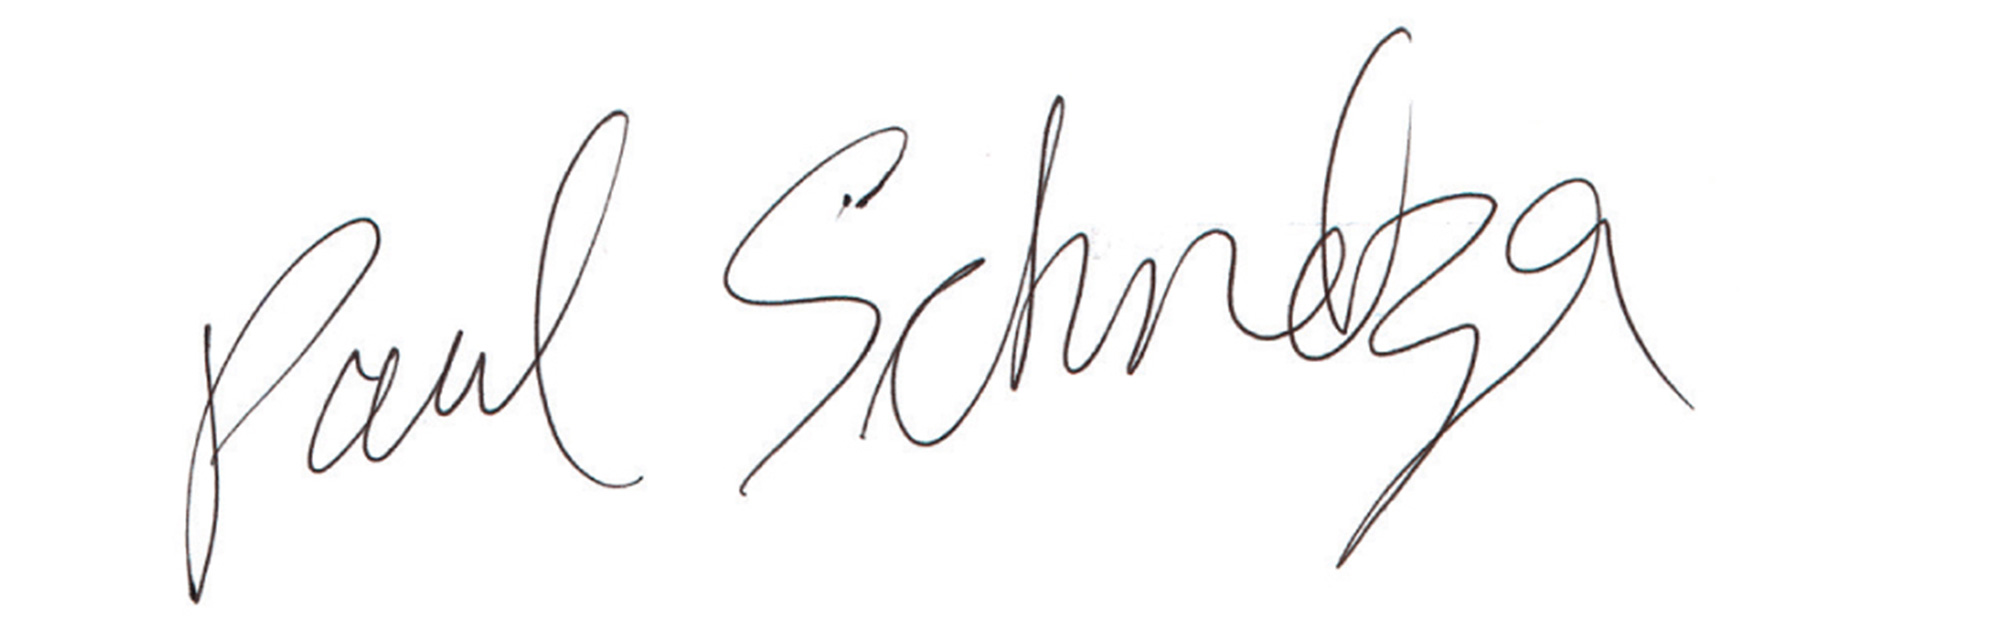 A photograph of Kim Gordon's written version of the name Paul Schmelzer.